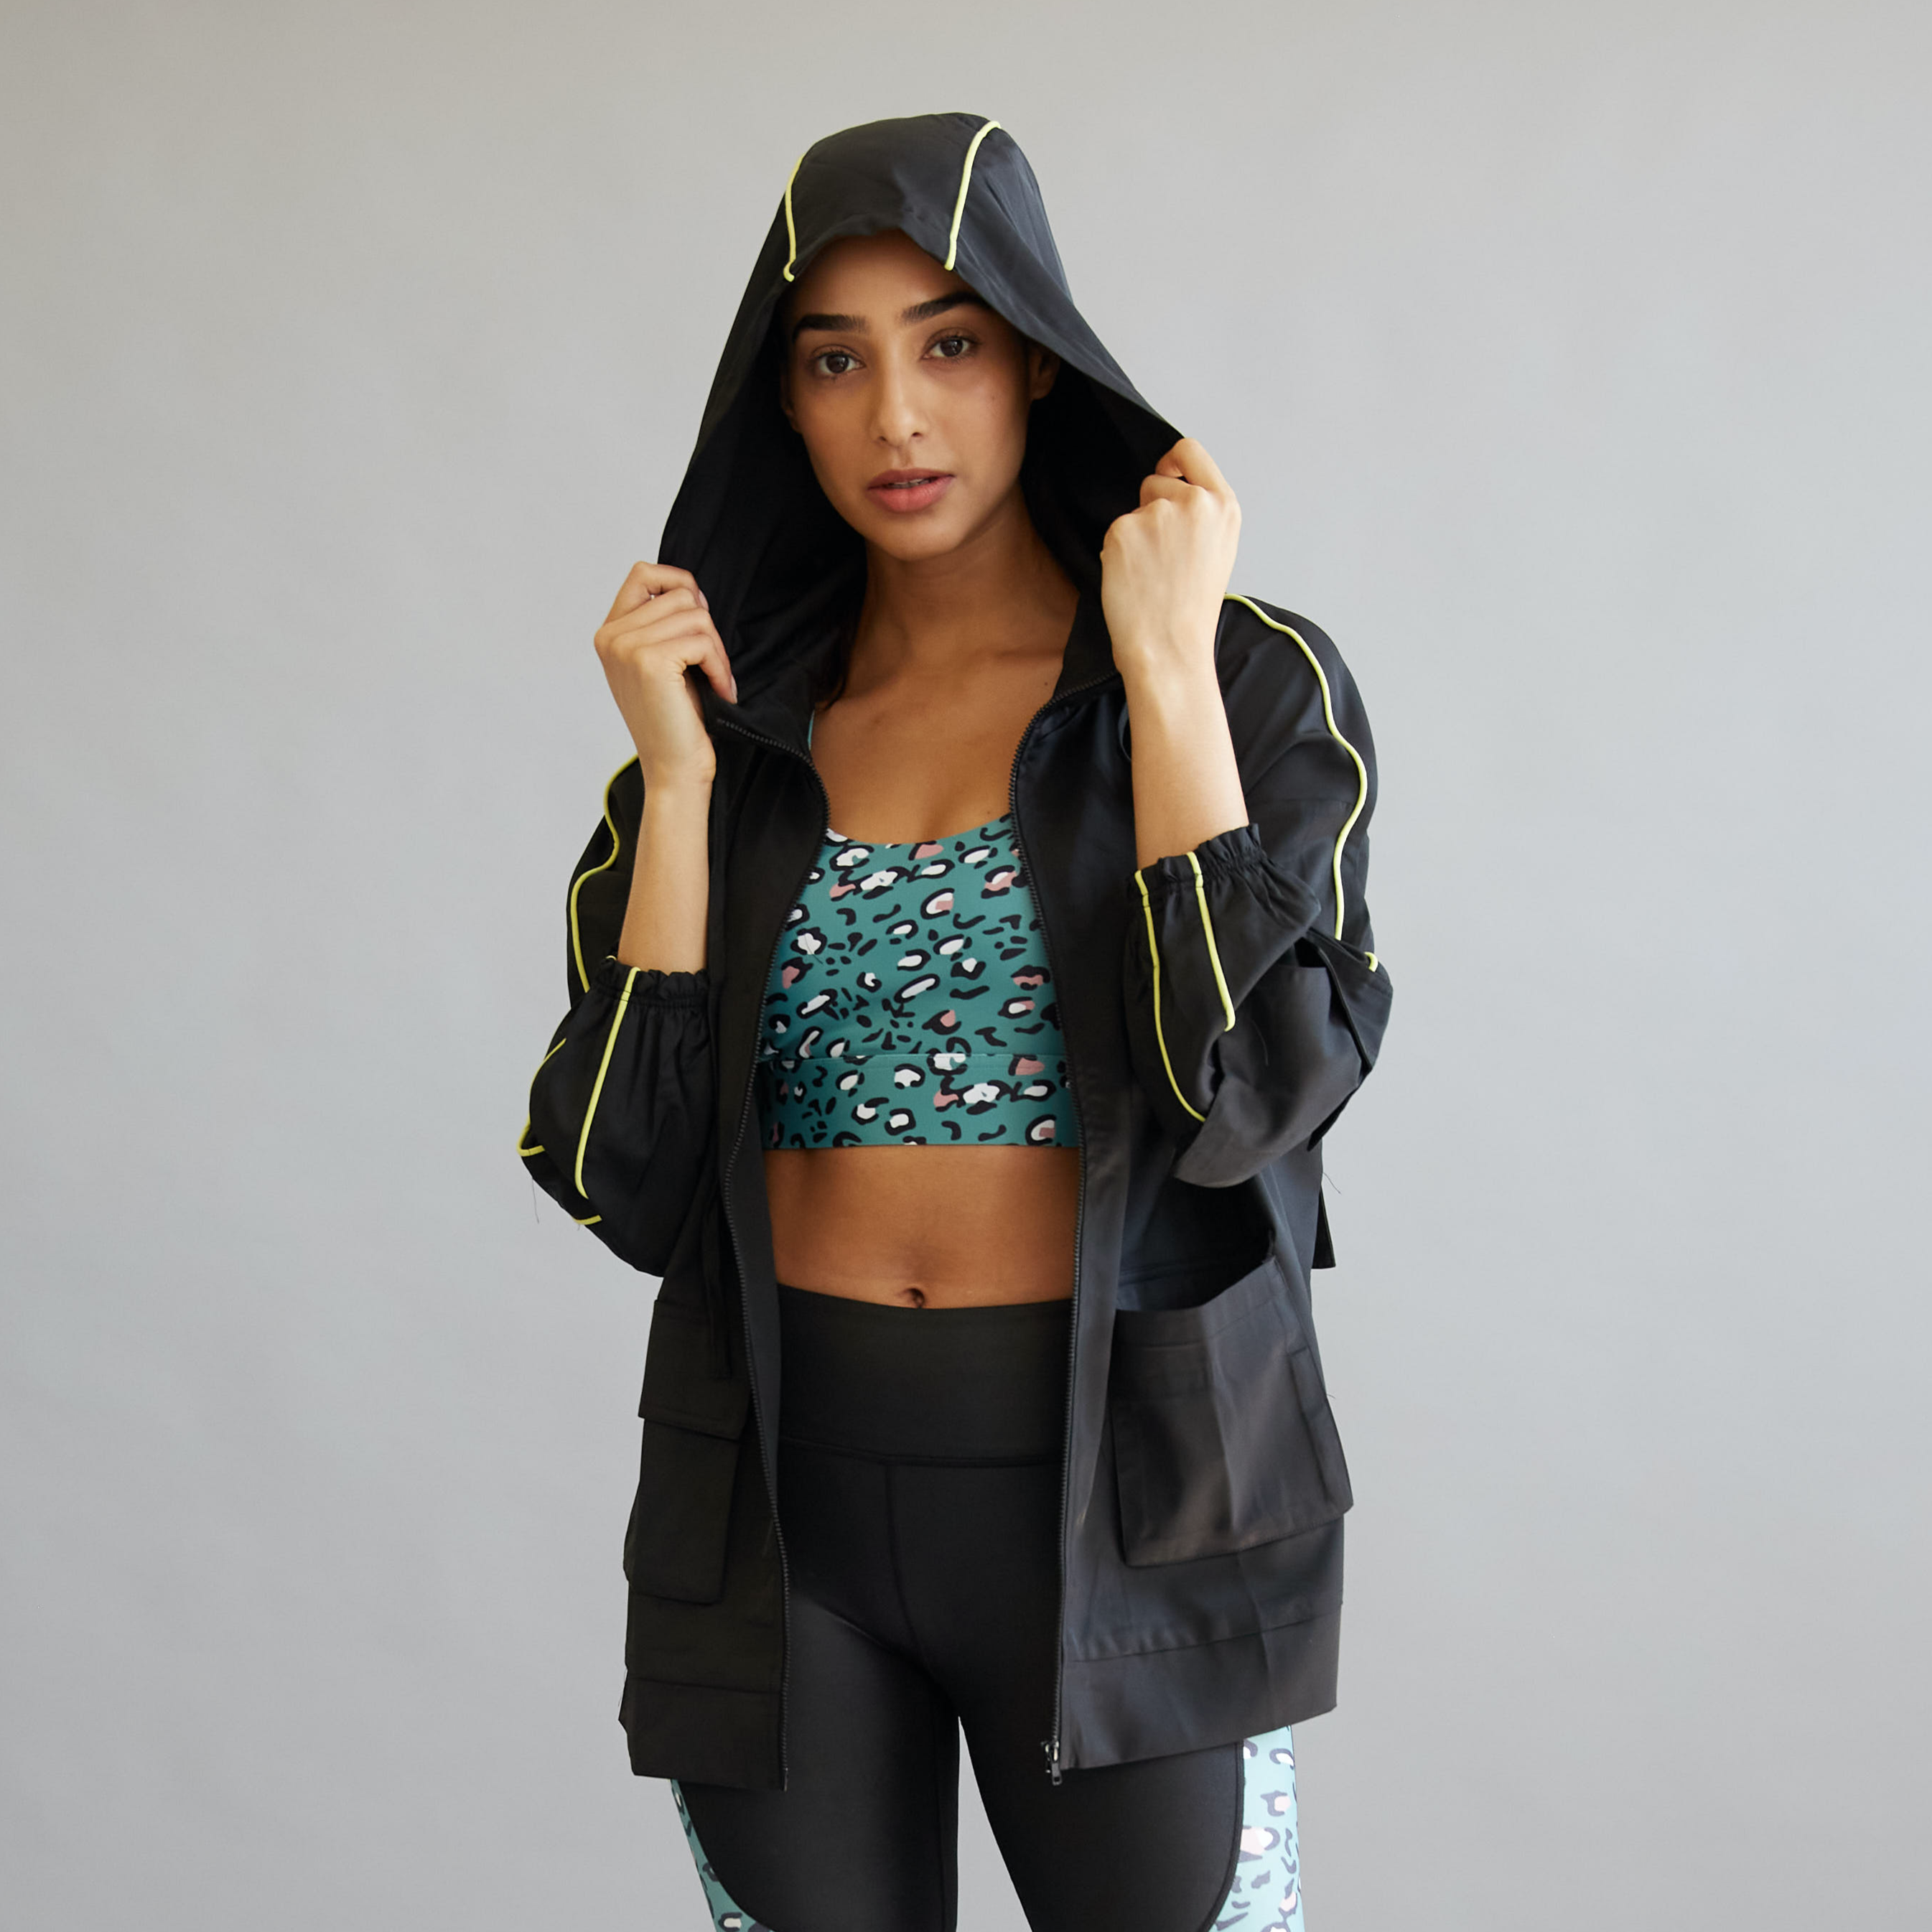 Packable Rain Jacket For Women - Stylish Raincoat by SCHAAD Active